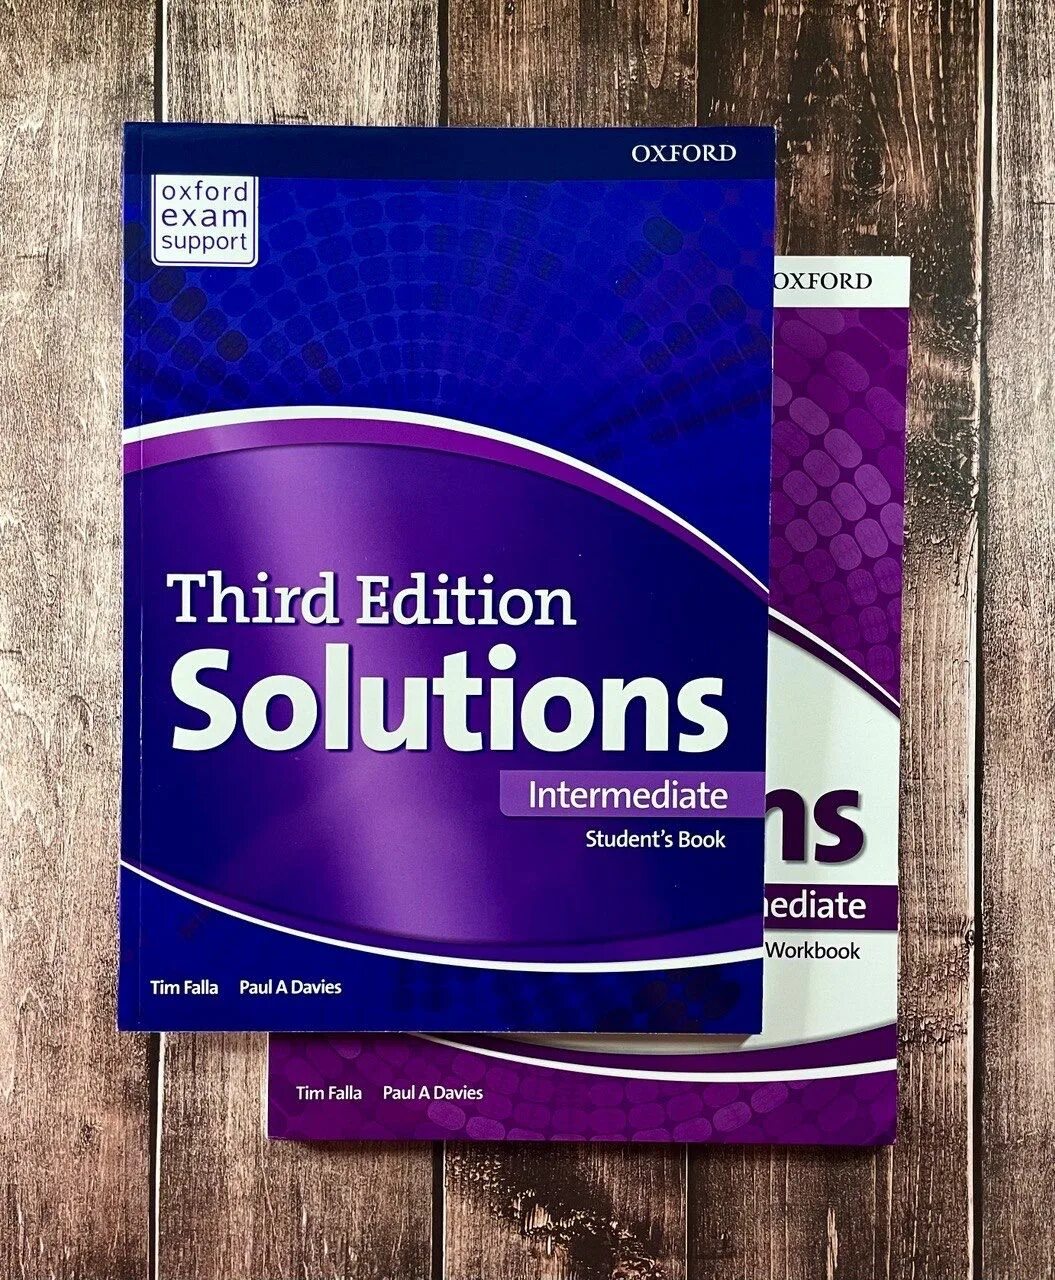 Solutions intermediate student s book ответы. Solutions pre-Intermediate 3rd Edition. Intermediate solutions Intermediate. Solutions Intermediate 3rd Edition. Third Edition solutions Intermediate Workbook.